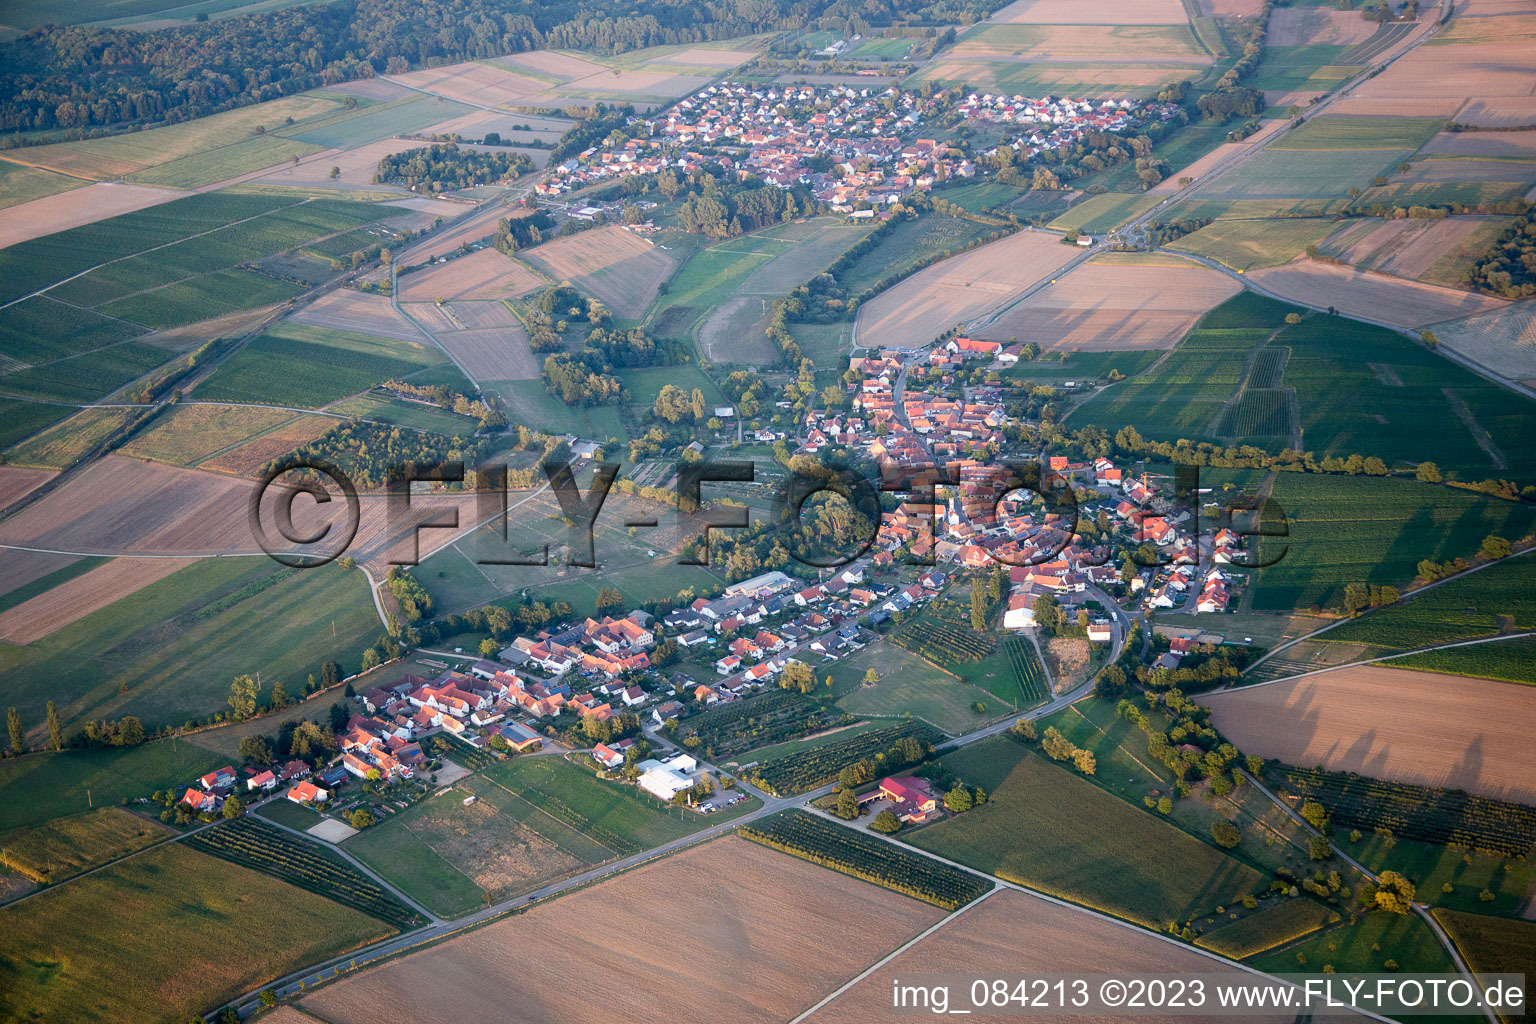 Bird's eye view of Oberhausen in the state Rhineland-Palatinate, Germany